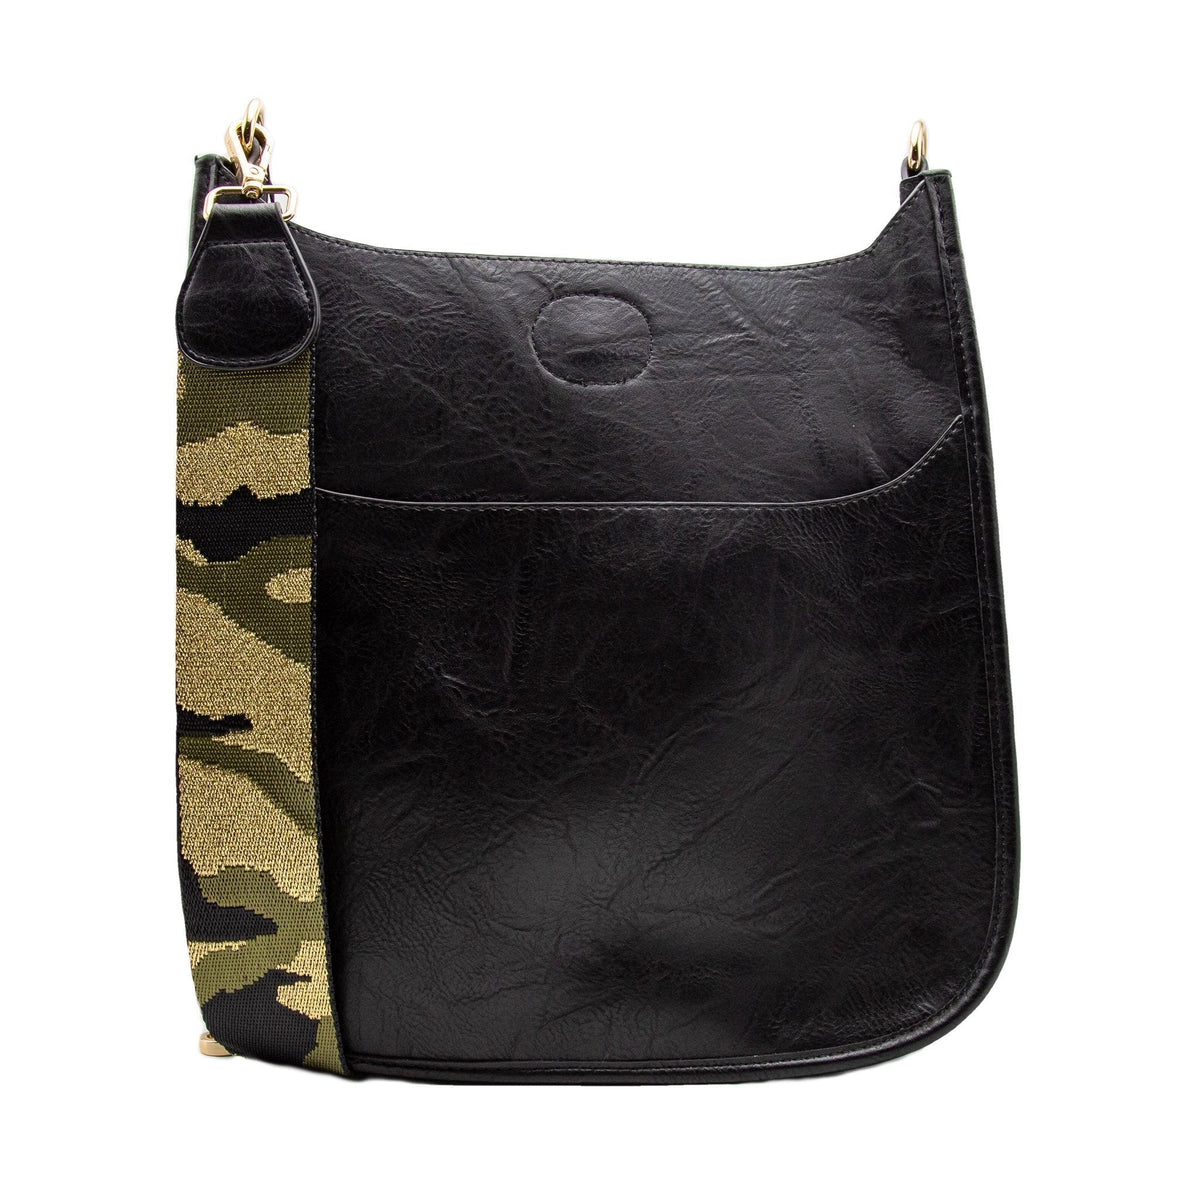 Ahdorned Black Vegan Leather Crossbody Messenger Handbag